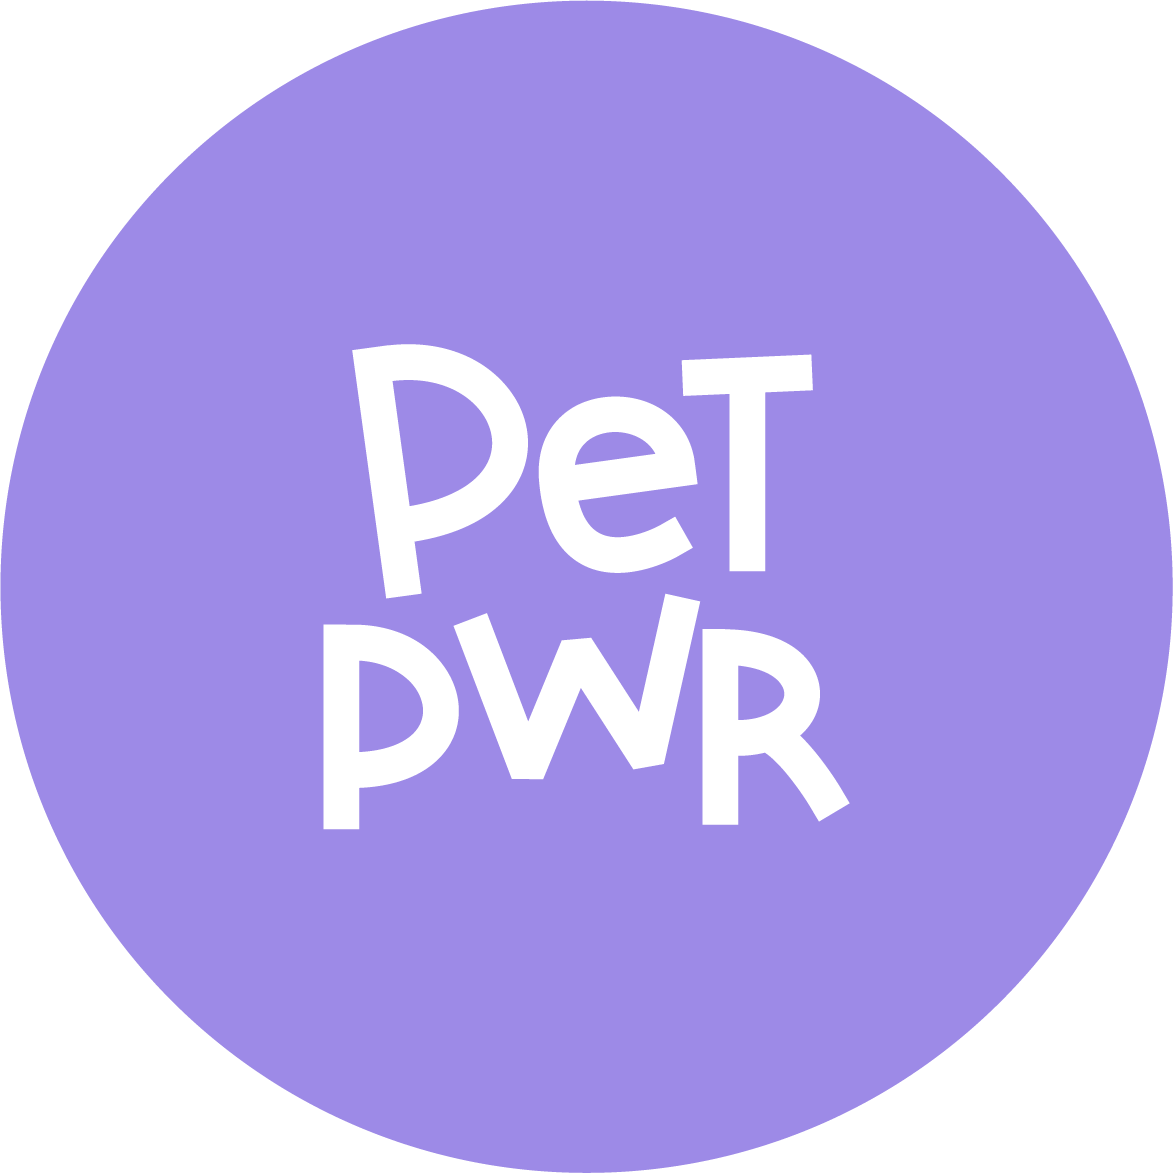 Pet Pwr